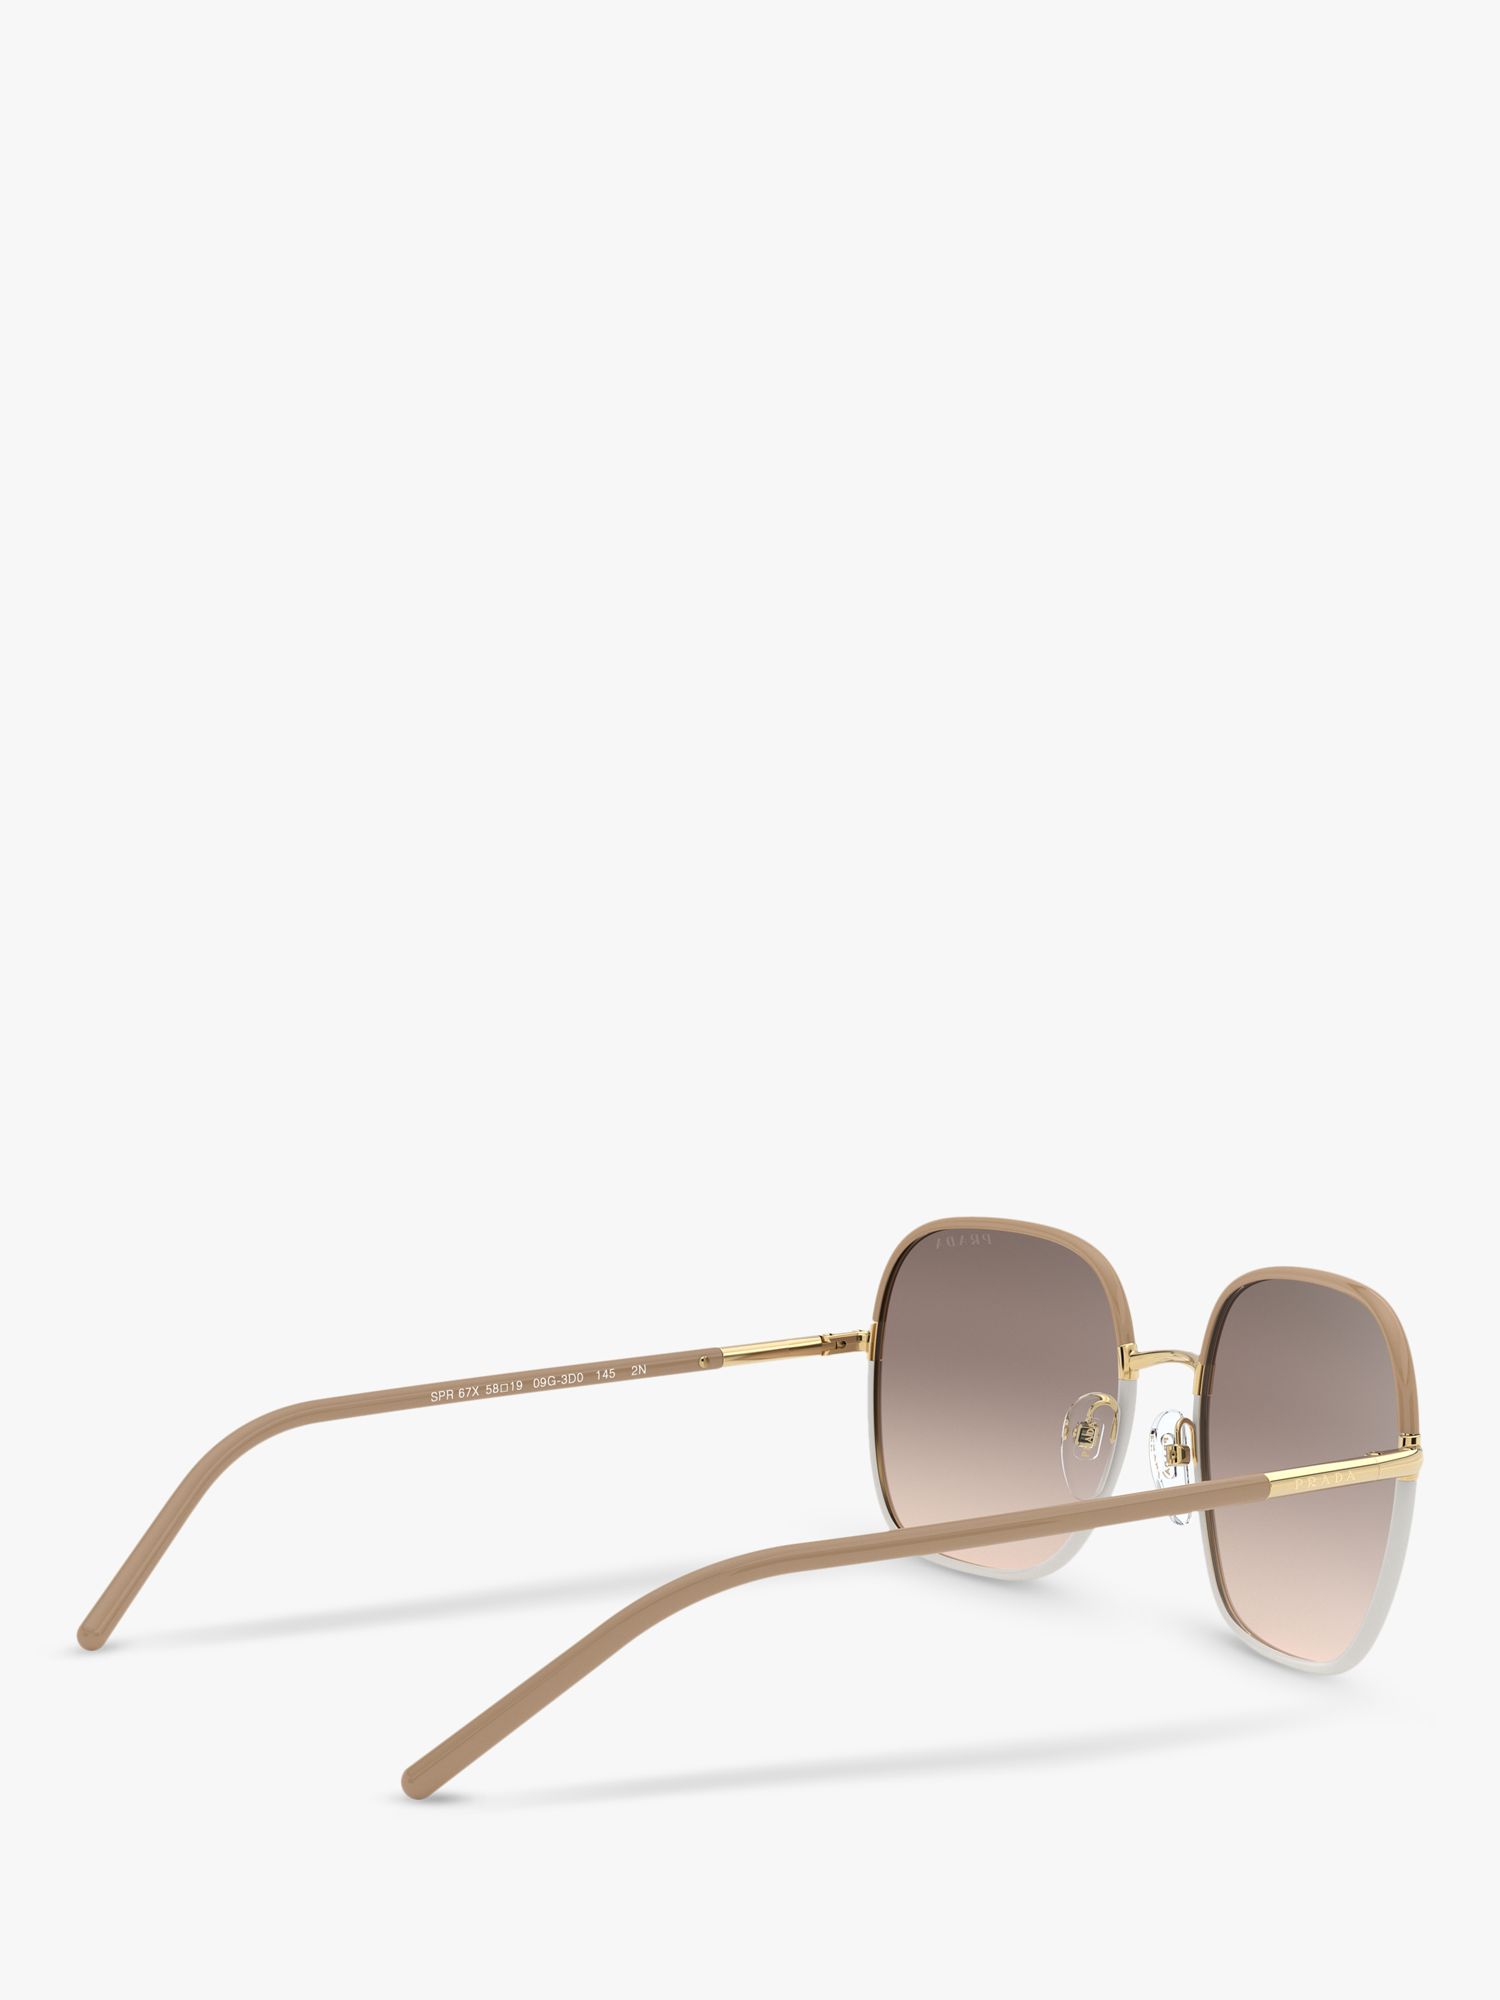 Prada PR 67XS Women's Square Sunglasses, Gold/Beige/Light Brown ...